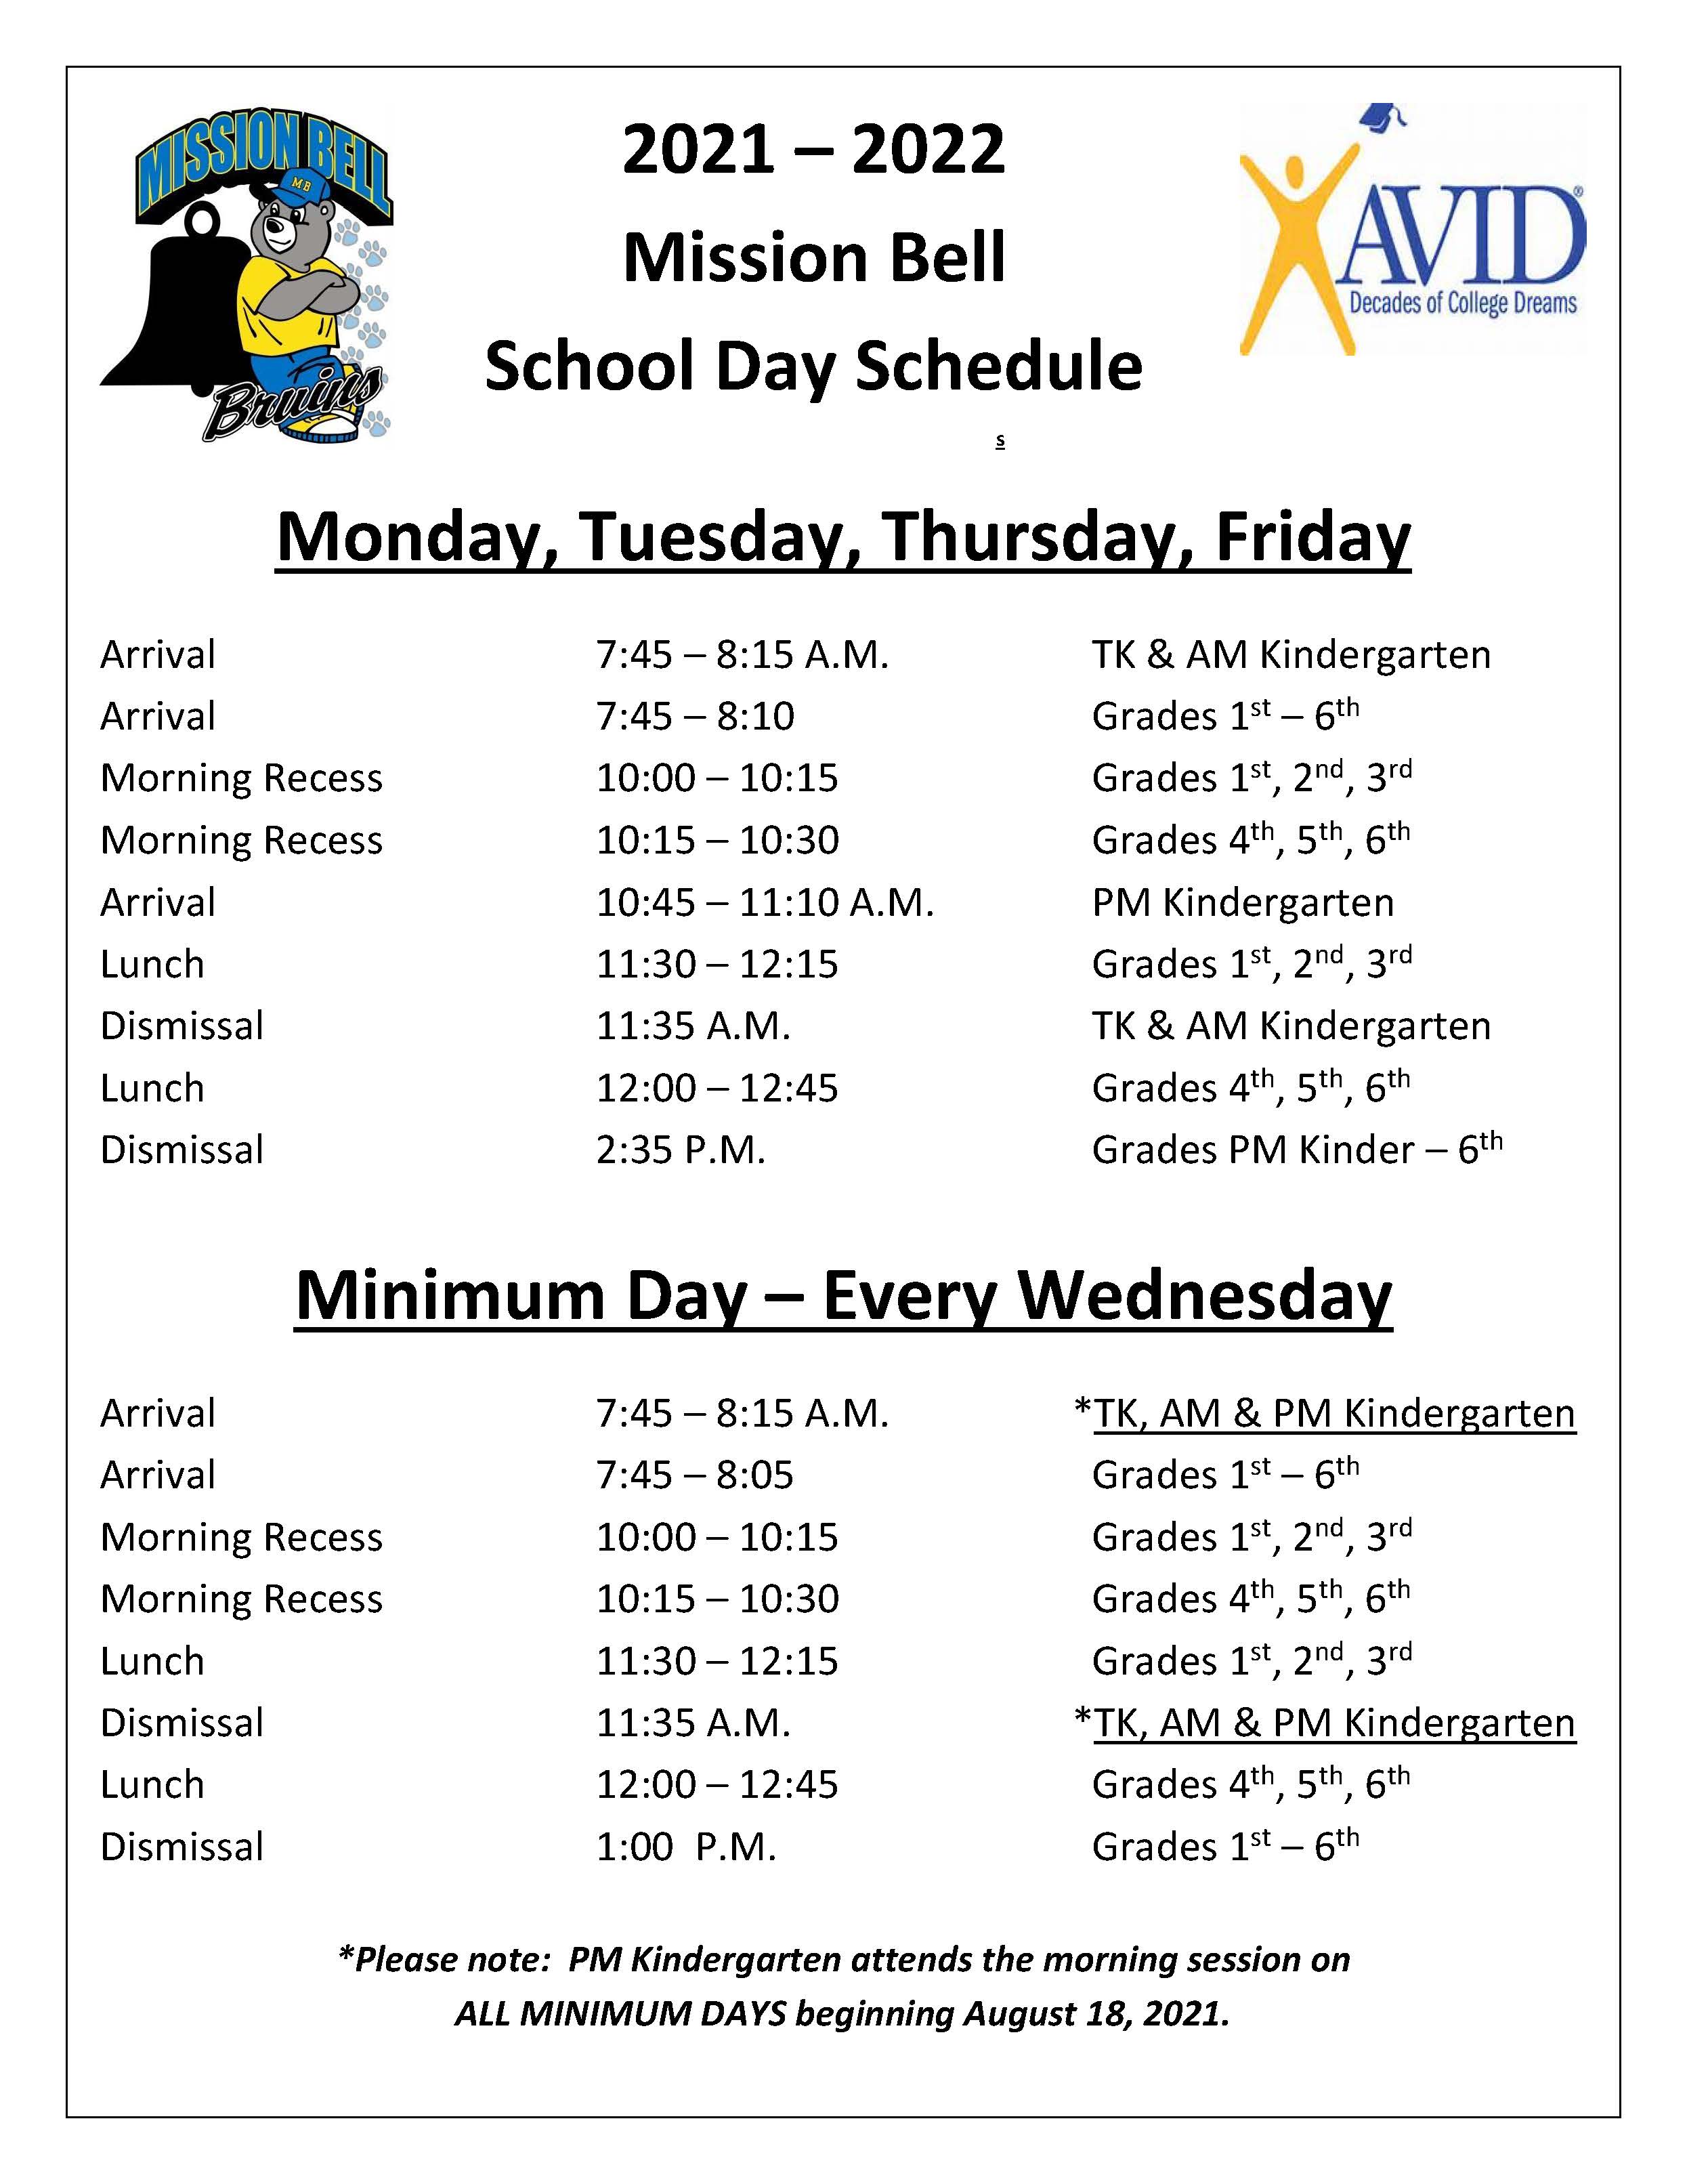 School_Day_Schedule.jpg